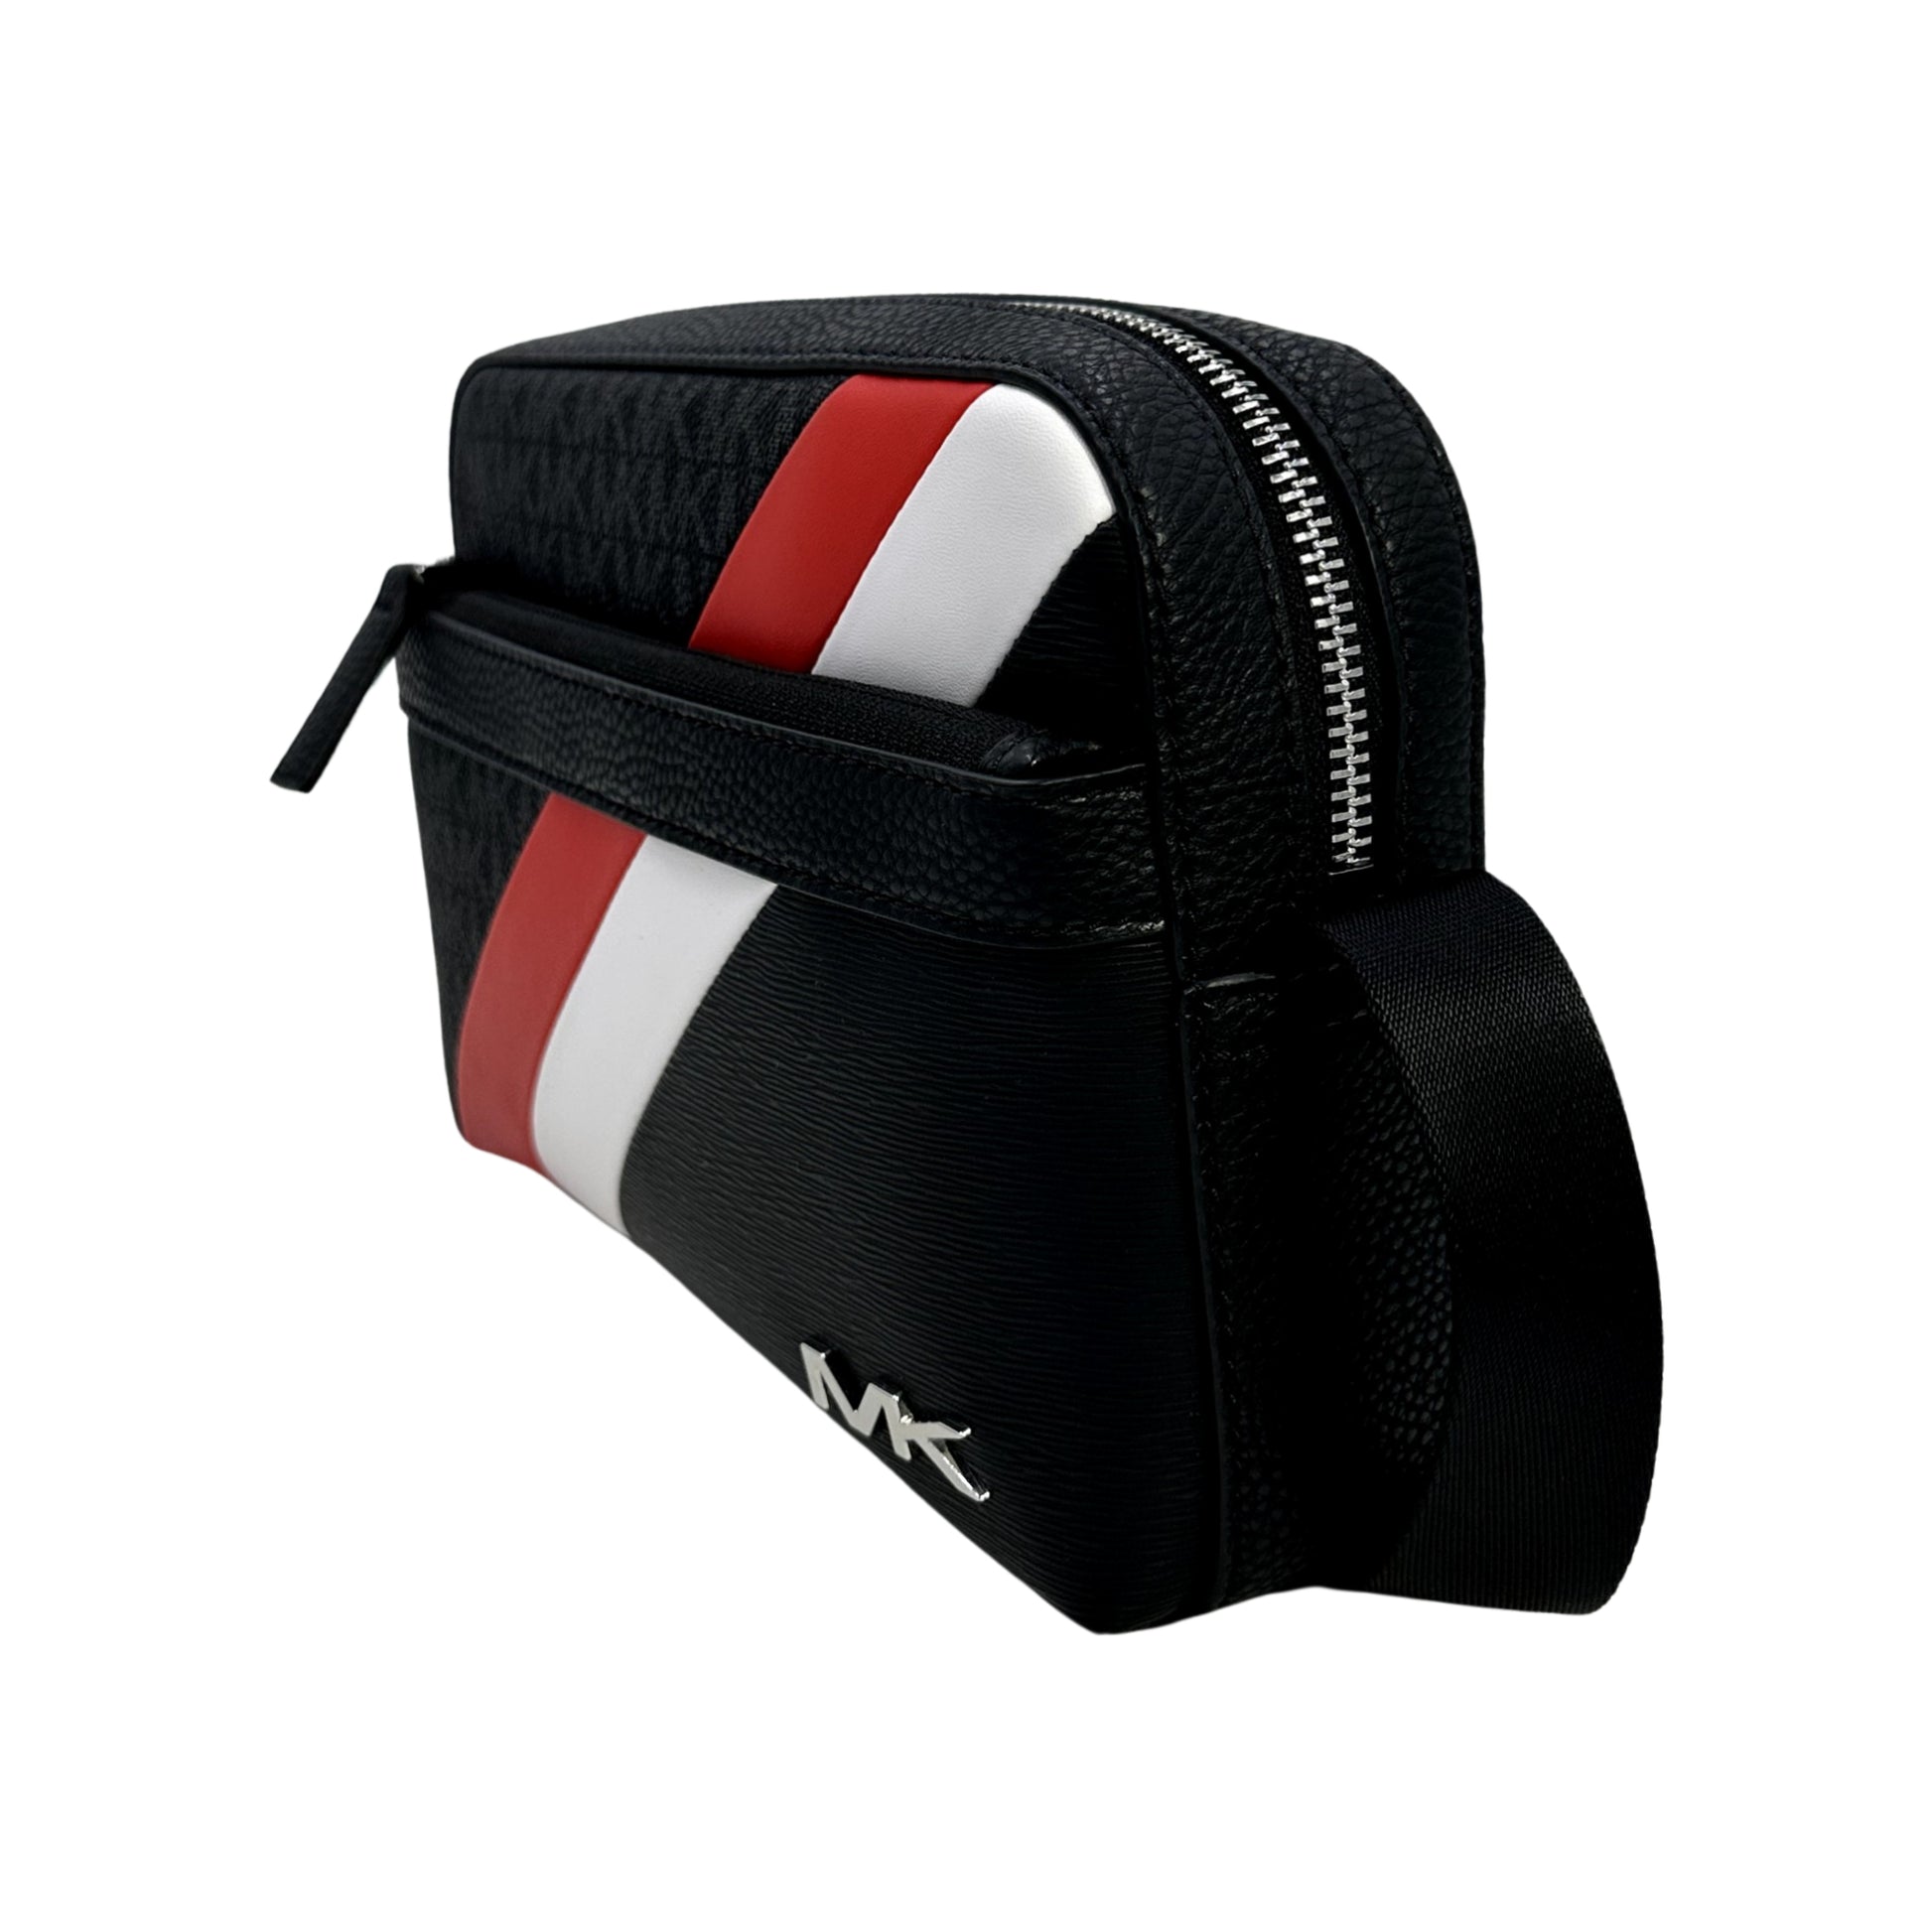 Michael Kors Cooper Logo Stripe And Faux Leather Crossbody Bag - Black Multi - 196237265630